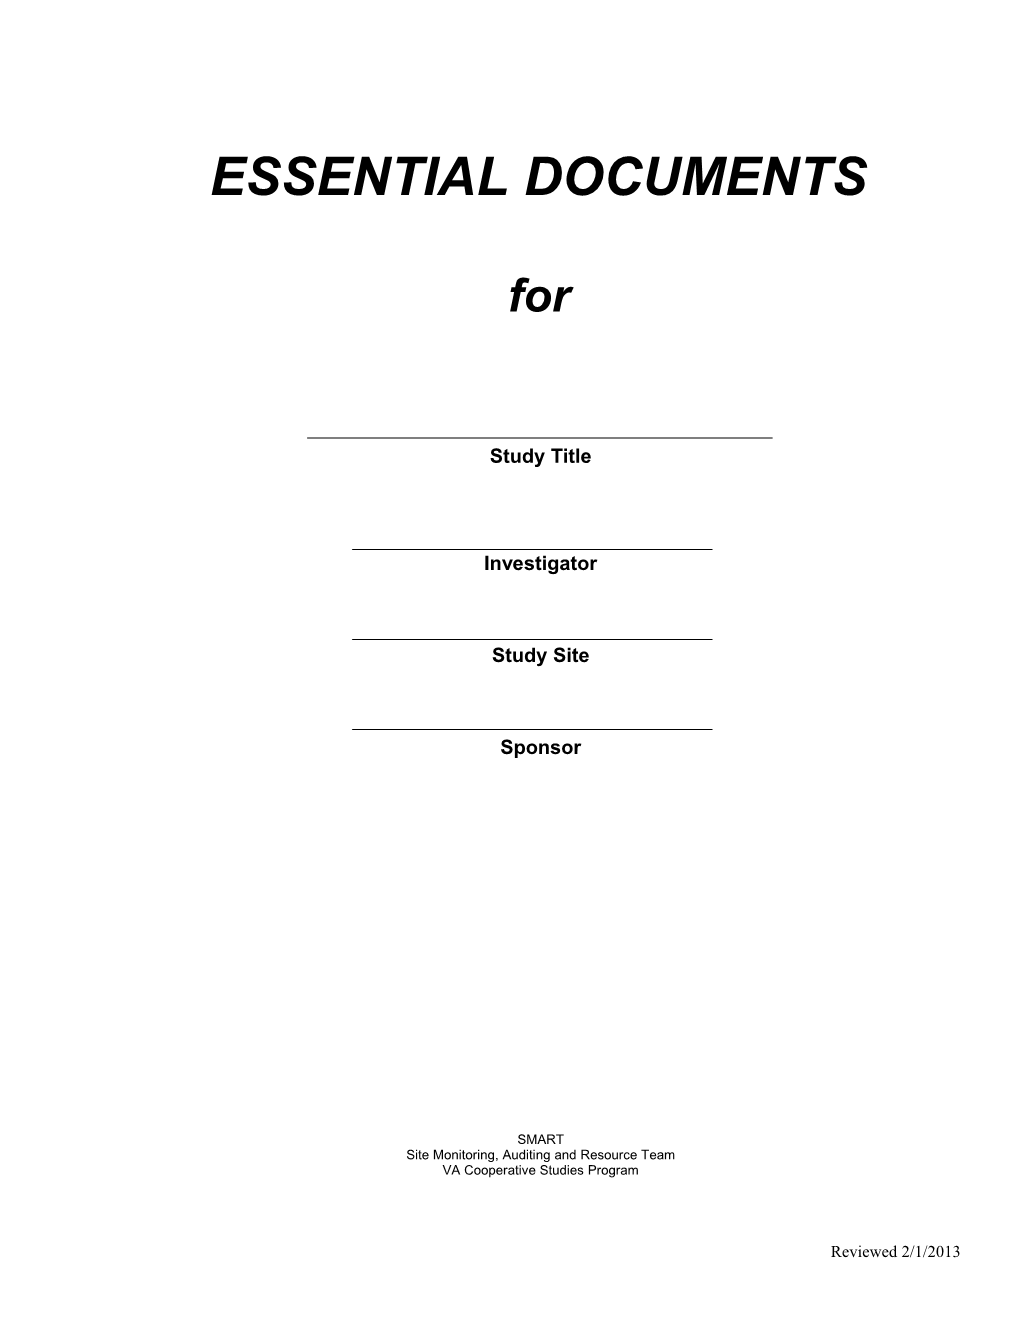 Essential Documents